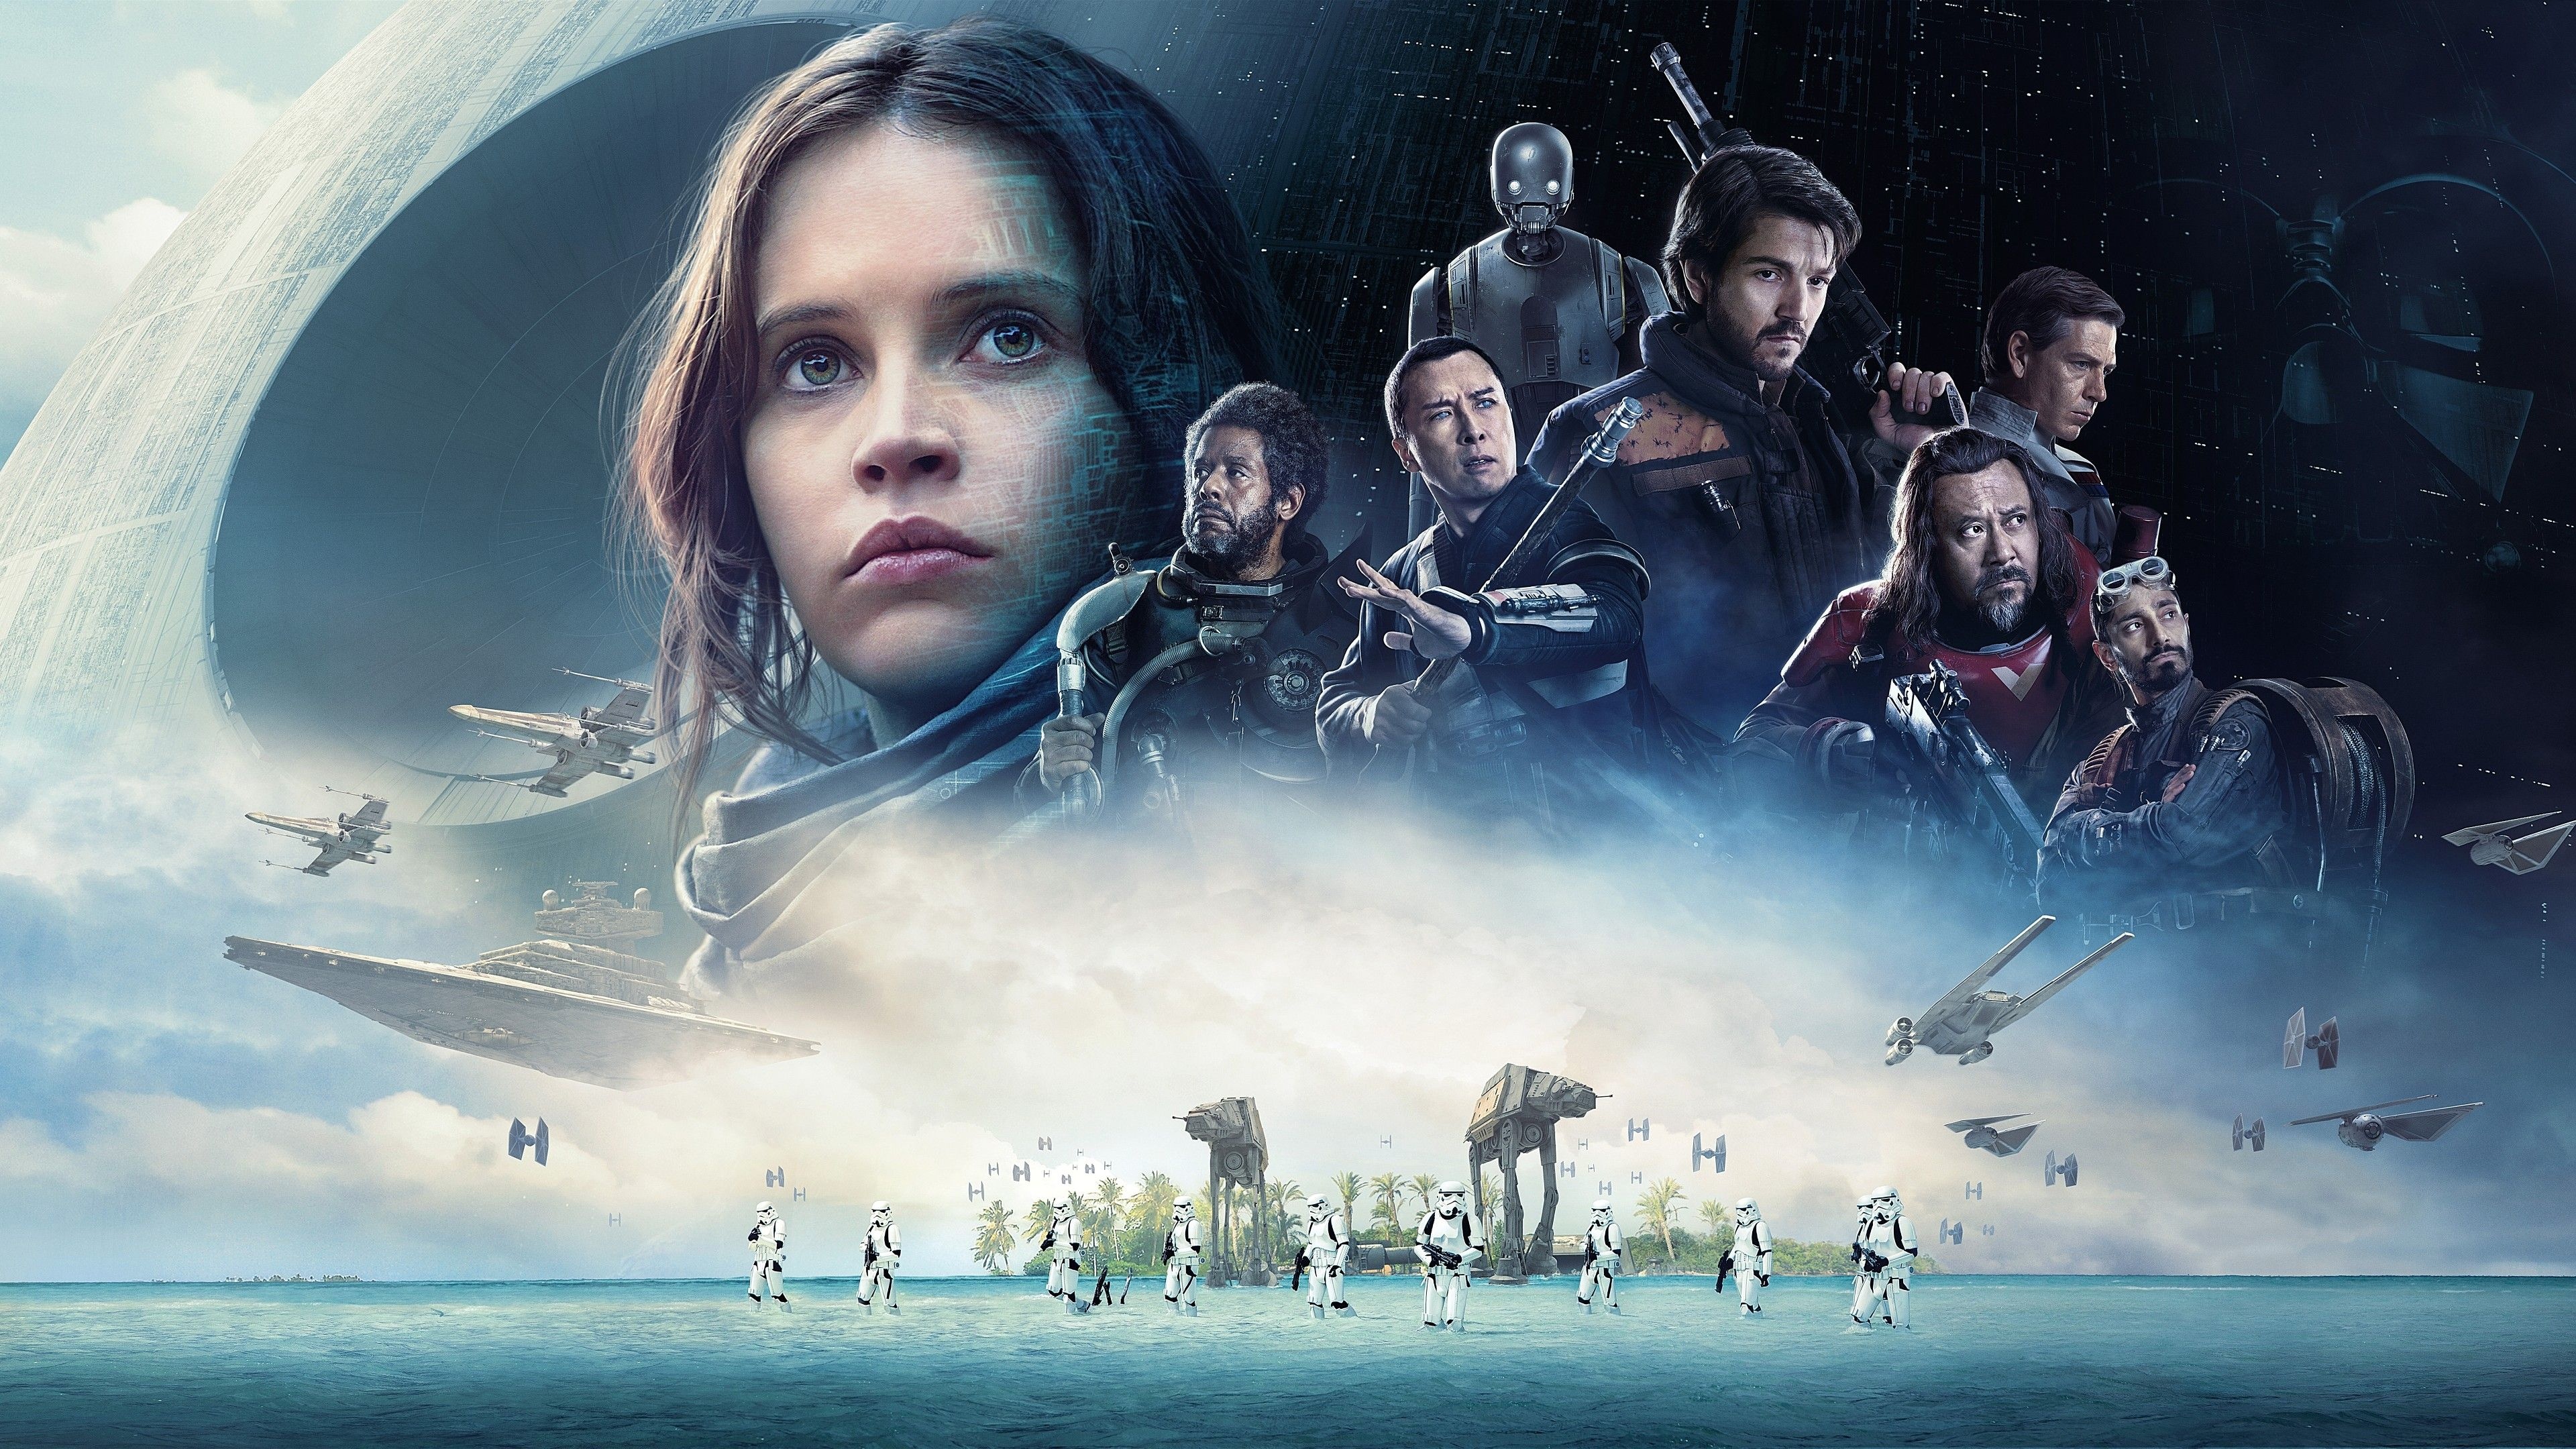 Star Wars movie poster wallpapers, Top free backgrounds, 3840x2160 4K Desktop